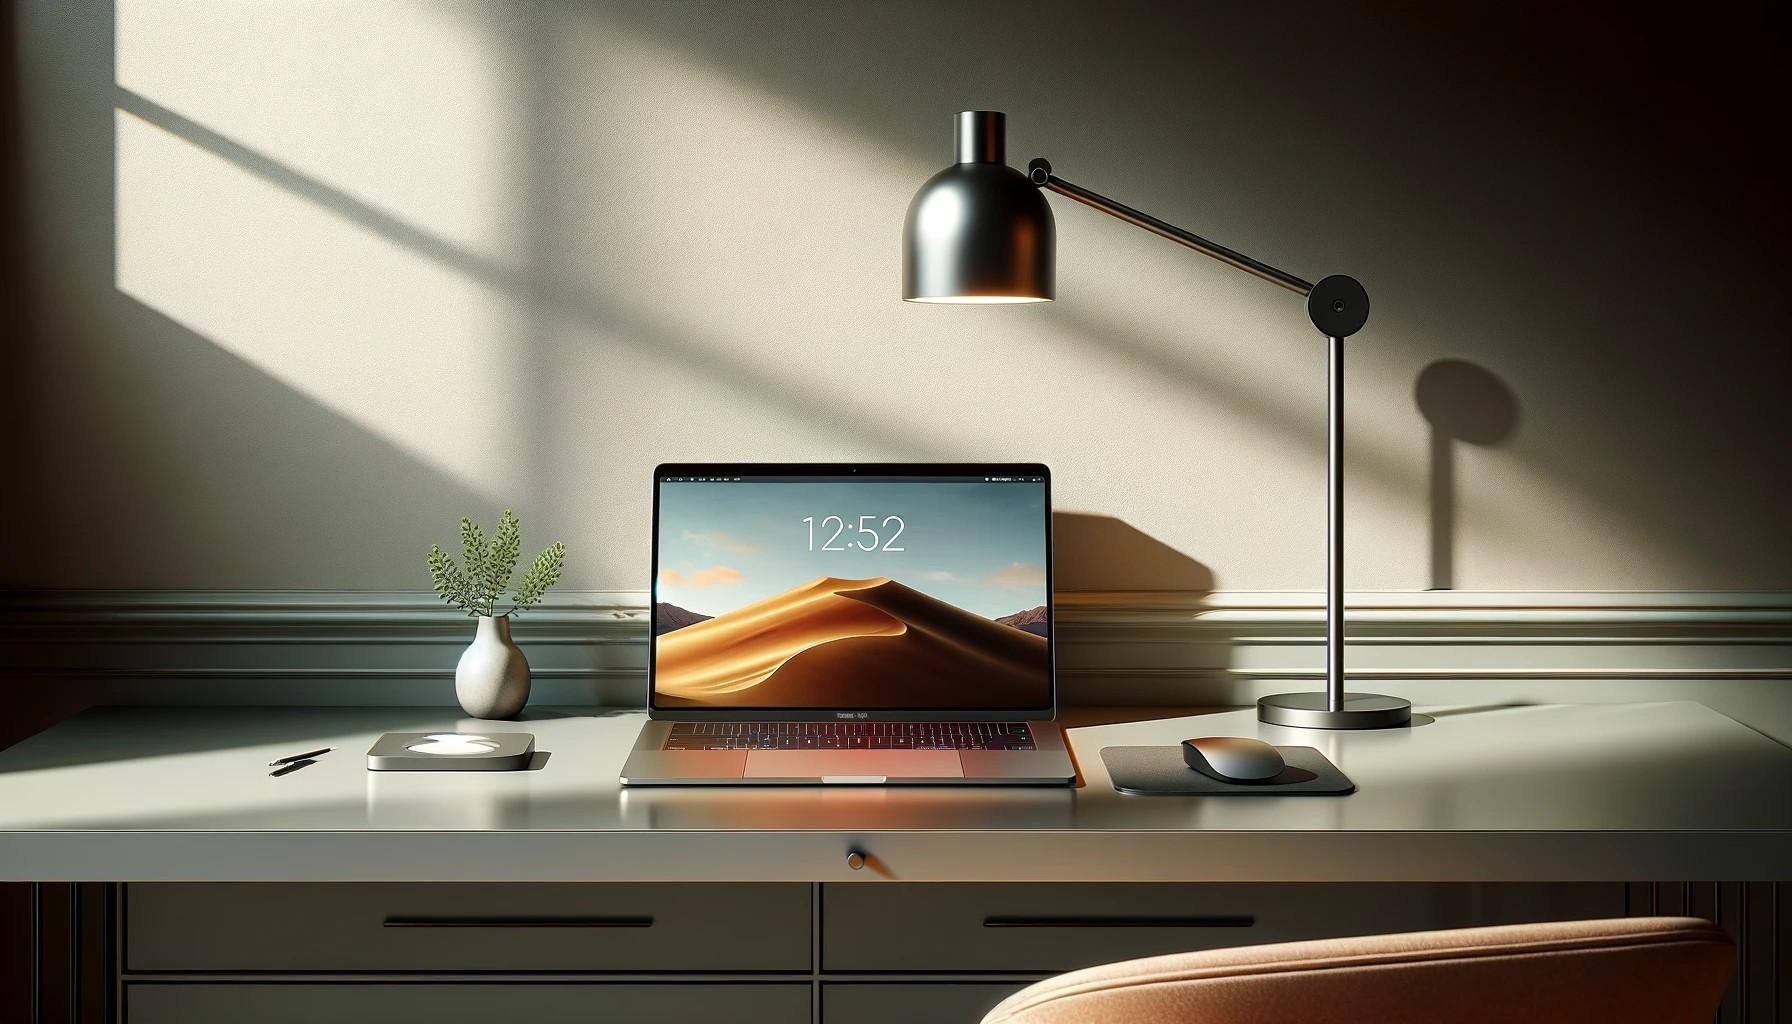 Macbook pro on a modern desk